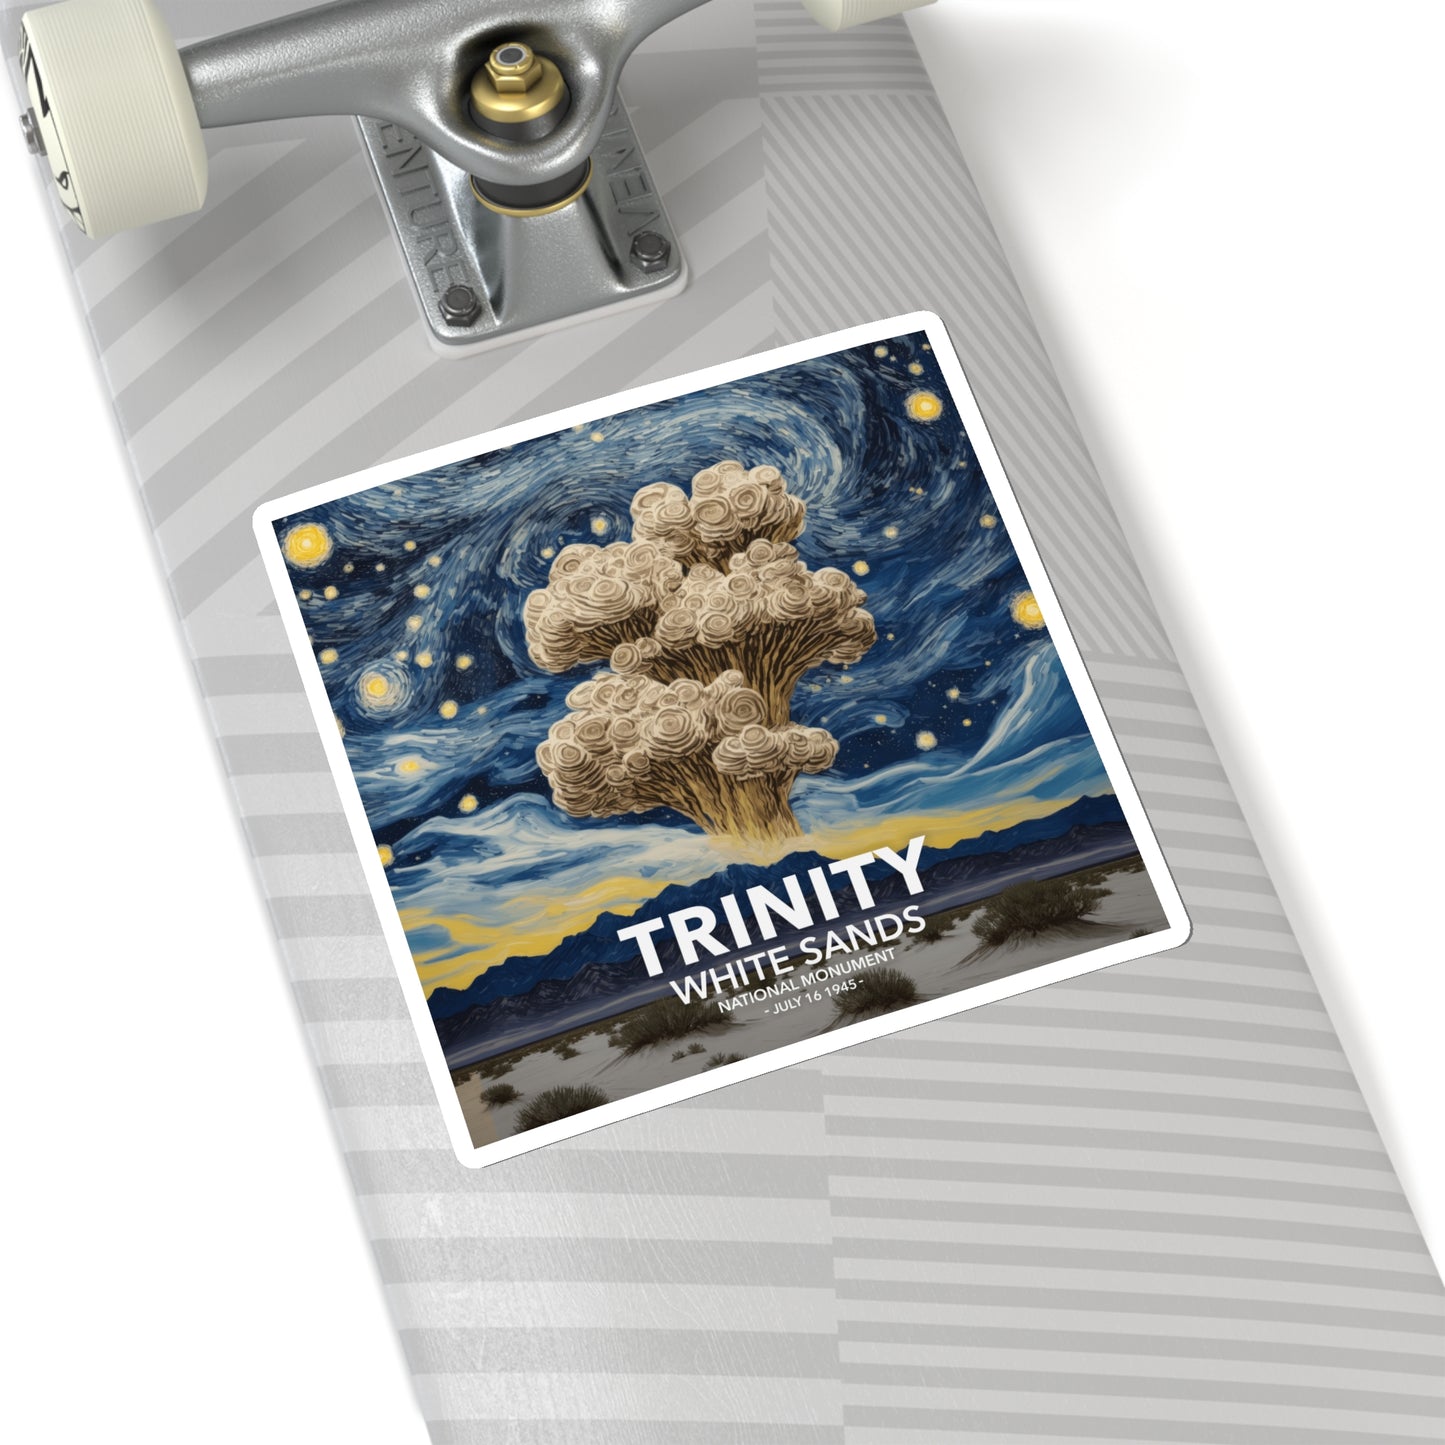 White Sands National Park Sticker - The Starry Night Trinity Test